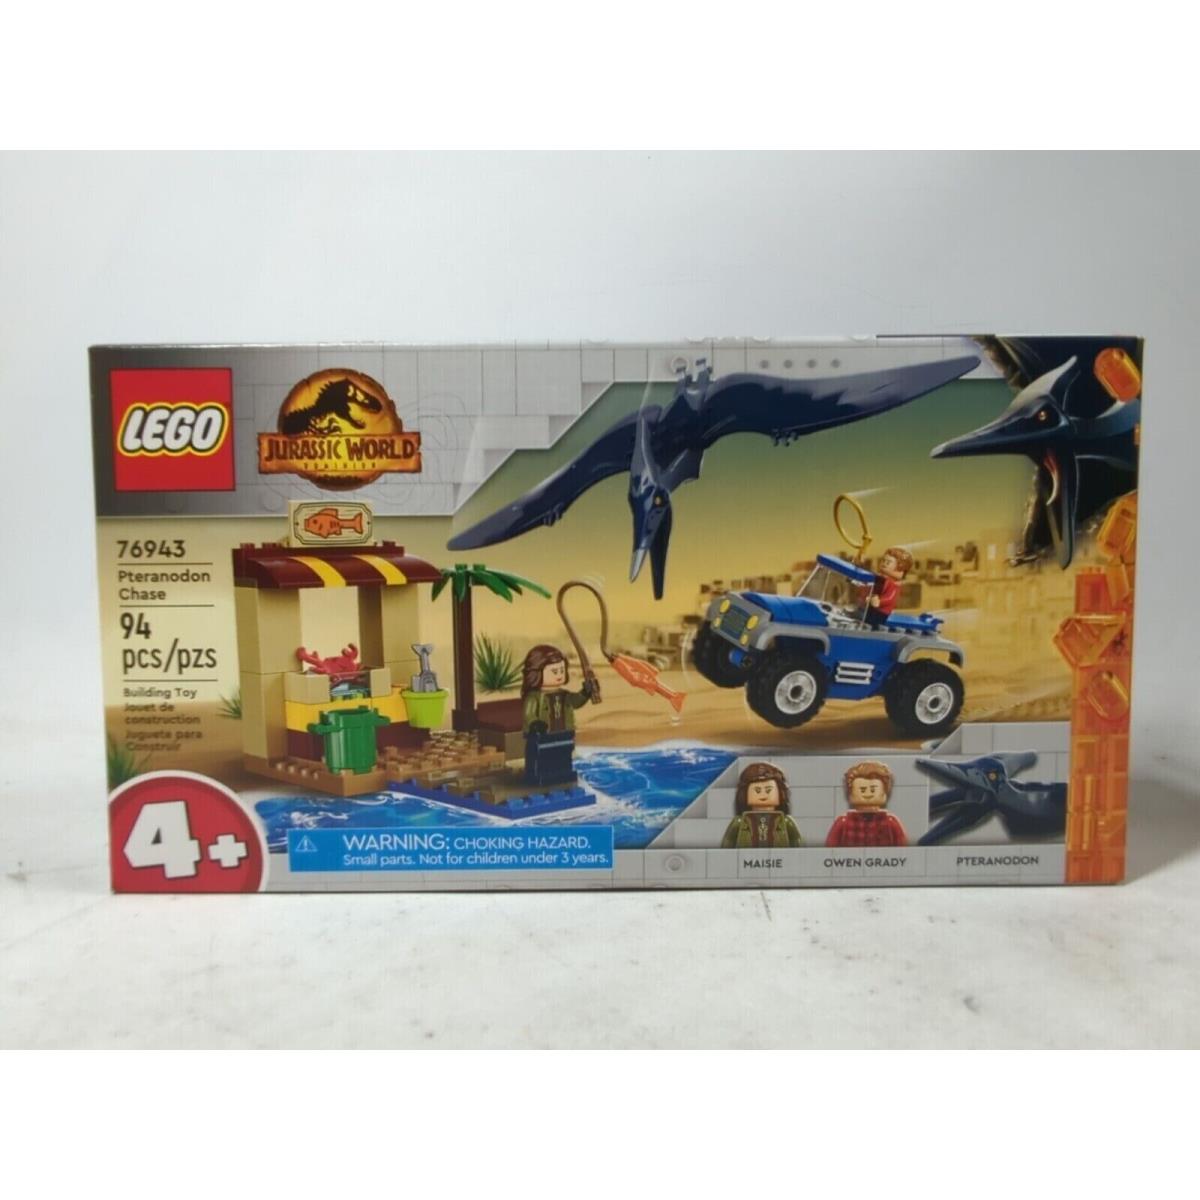 Lego Jurassic World: Pteranodon Chase 76943